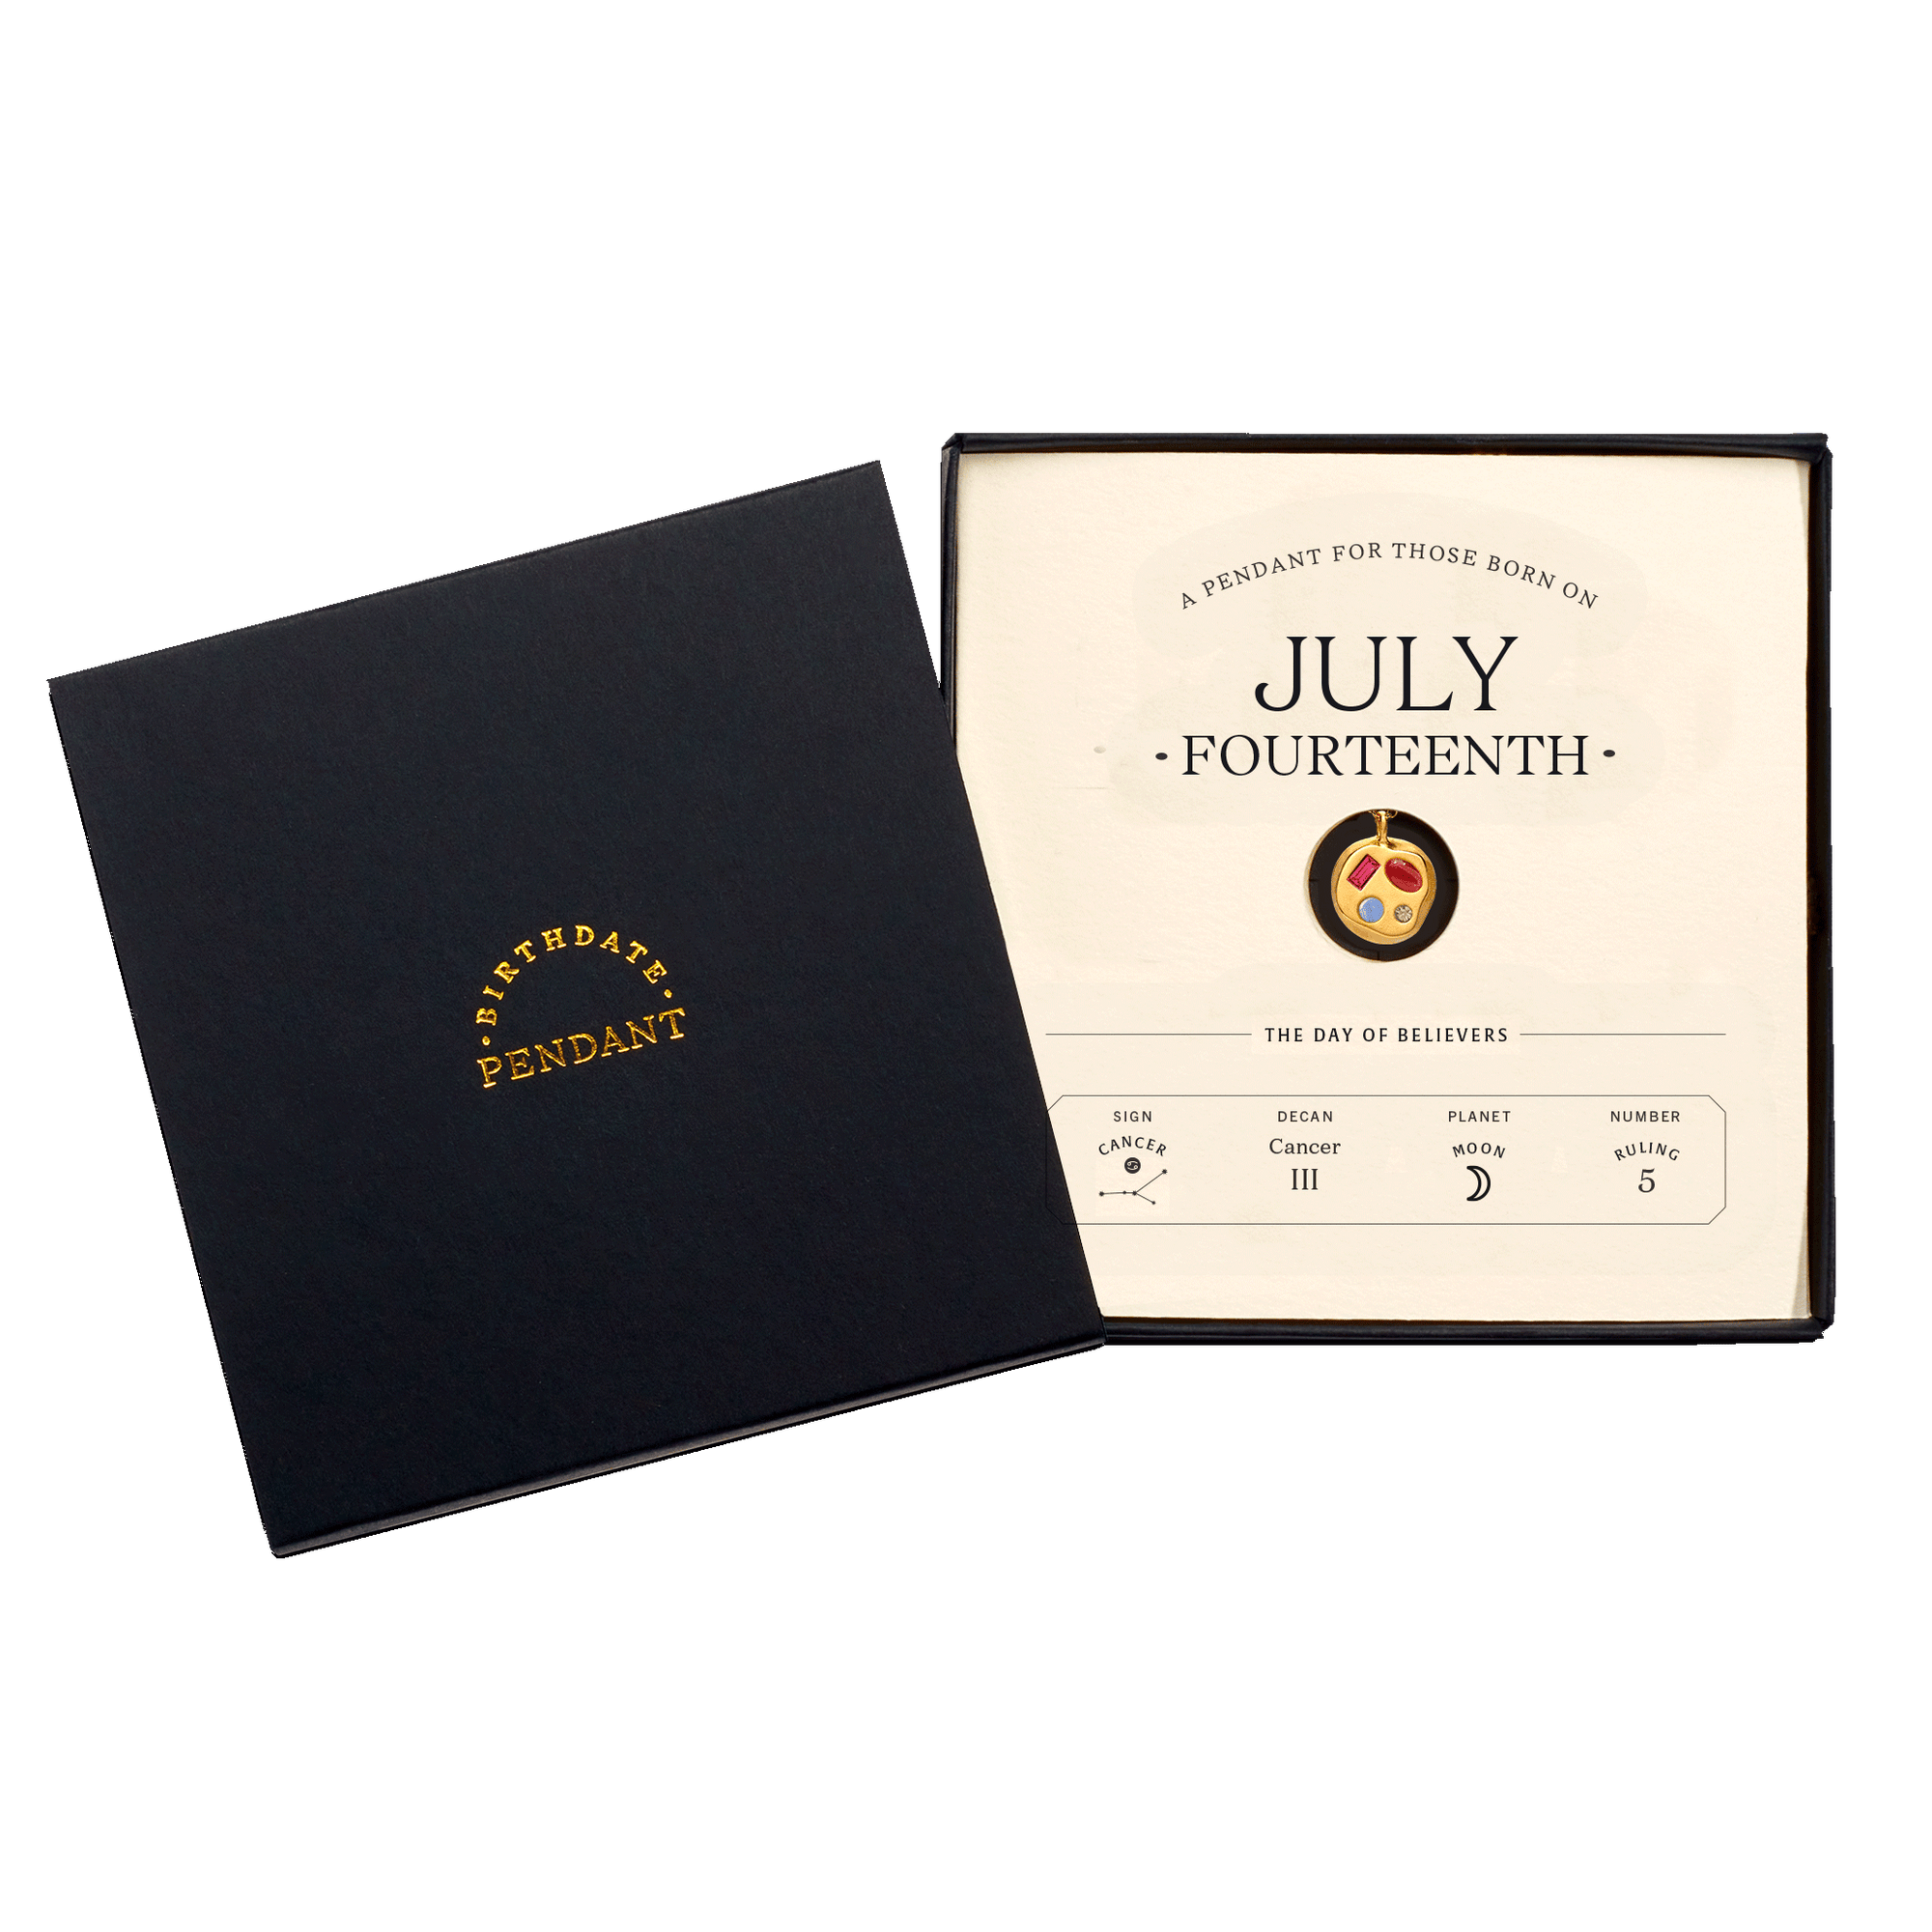 The July Fourteenth Pendant inside its box